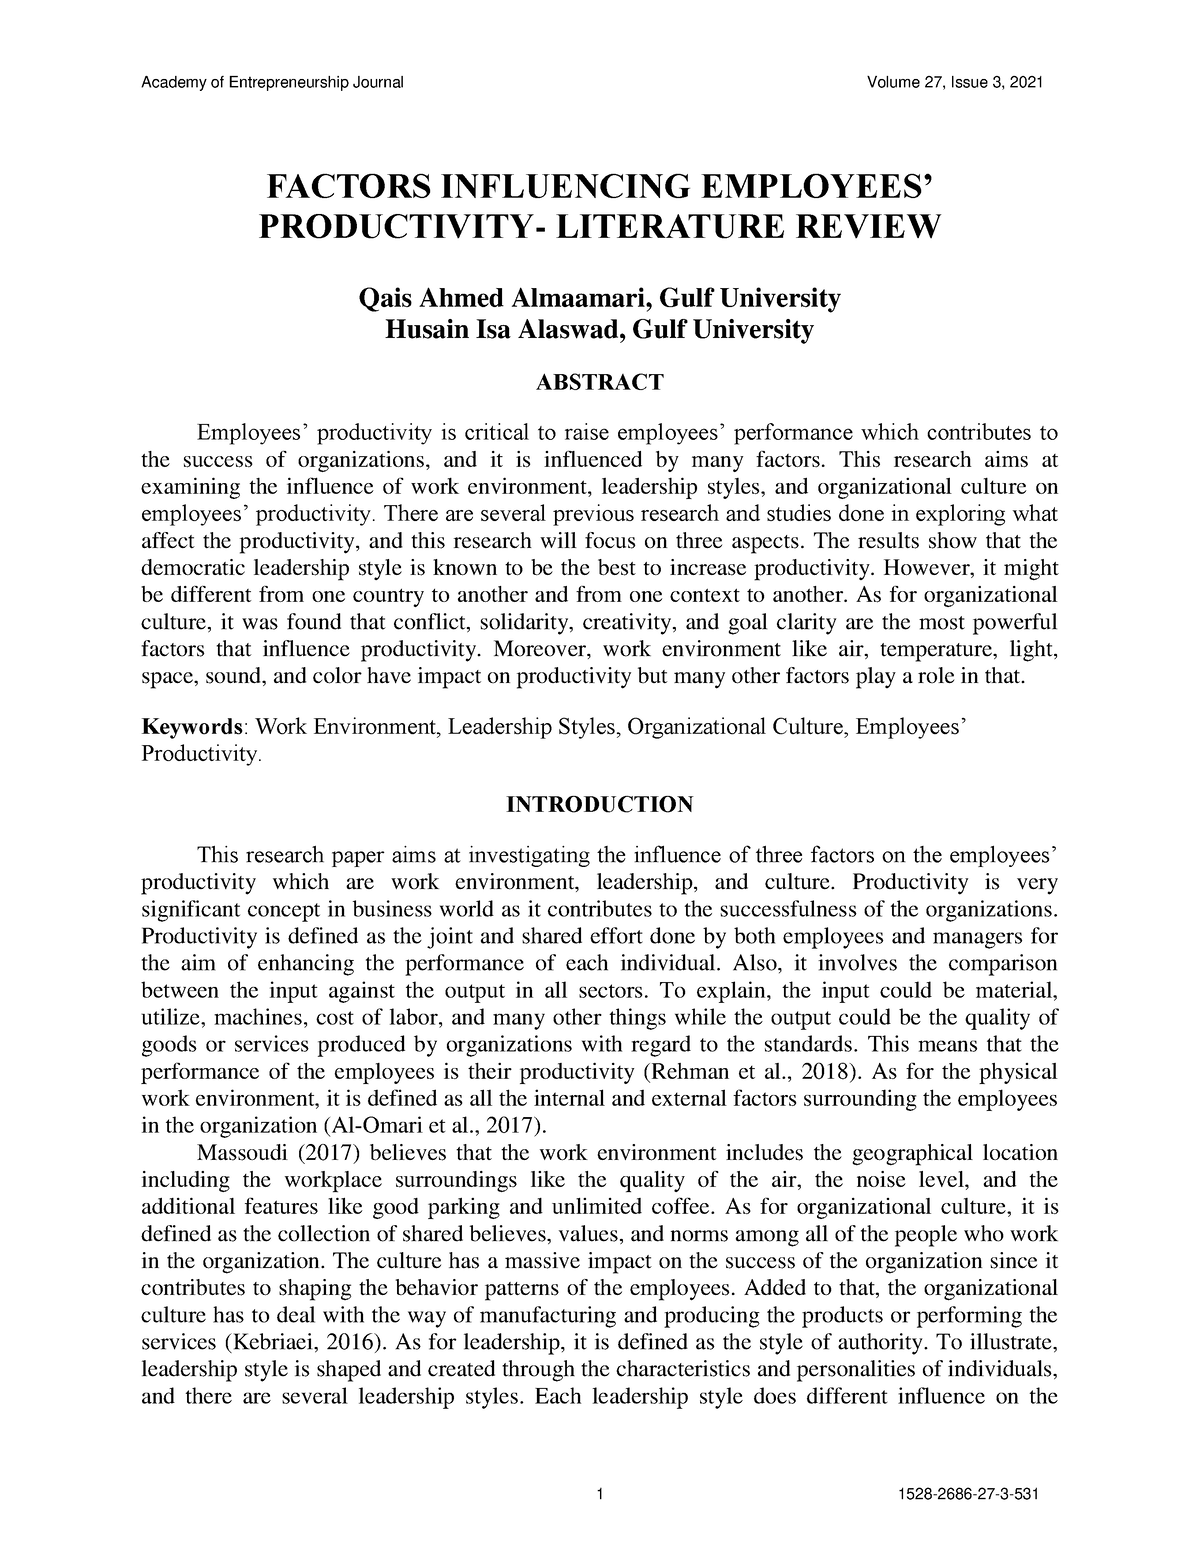 productivity literature review